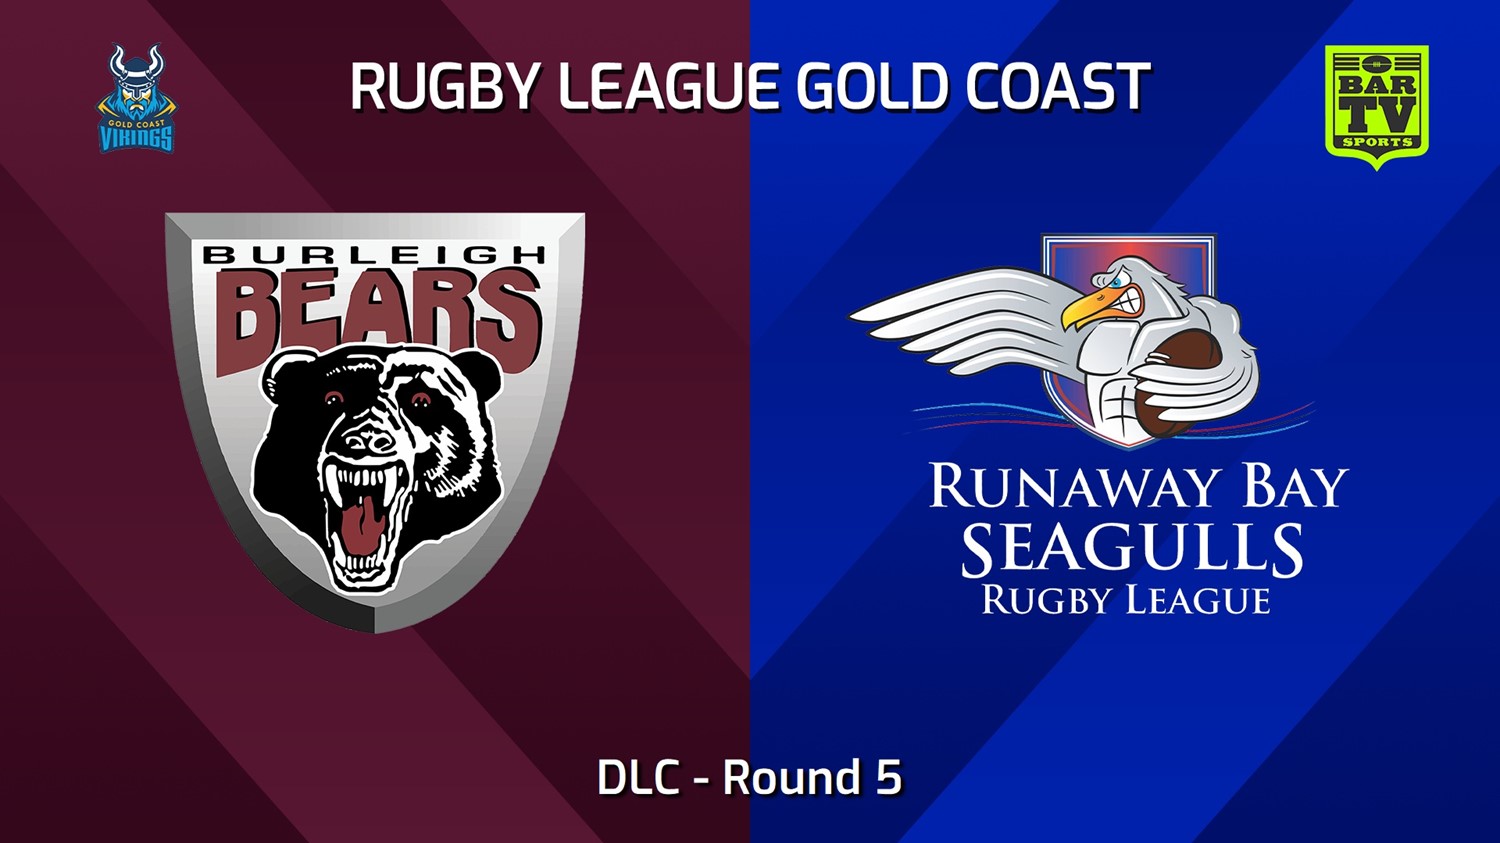 240526-video-Gold Coast Round 5 - DLC - Burleigh Bears v Runaway Bay Seagulls Slate Image